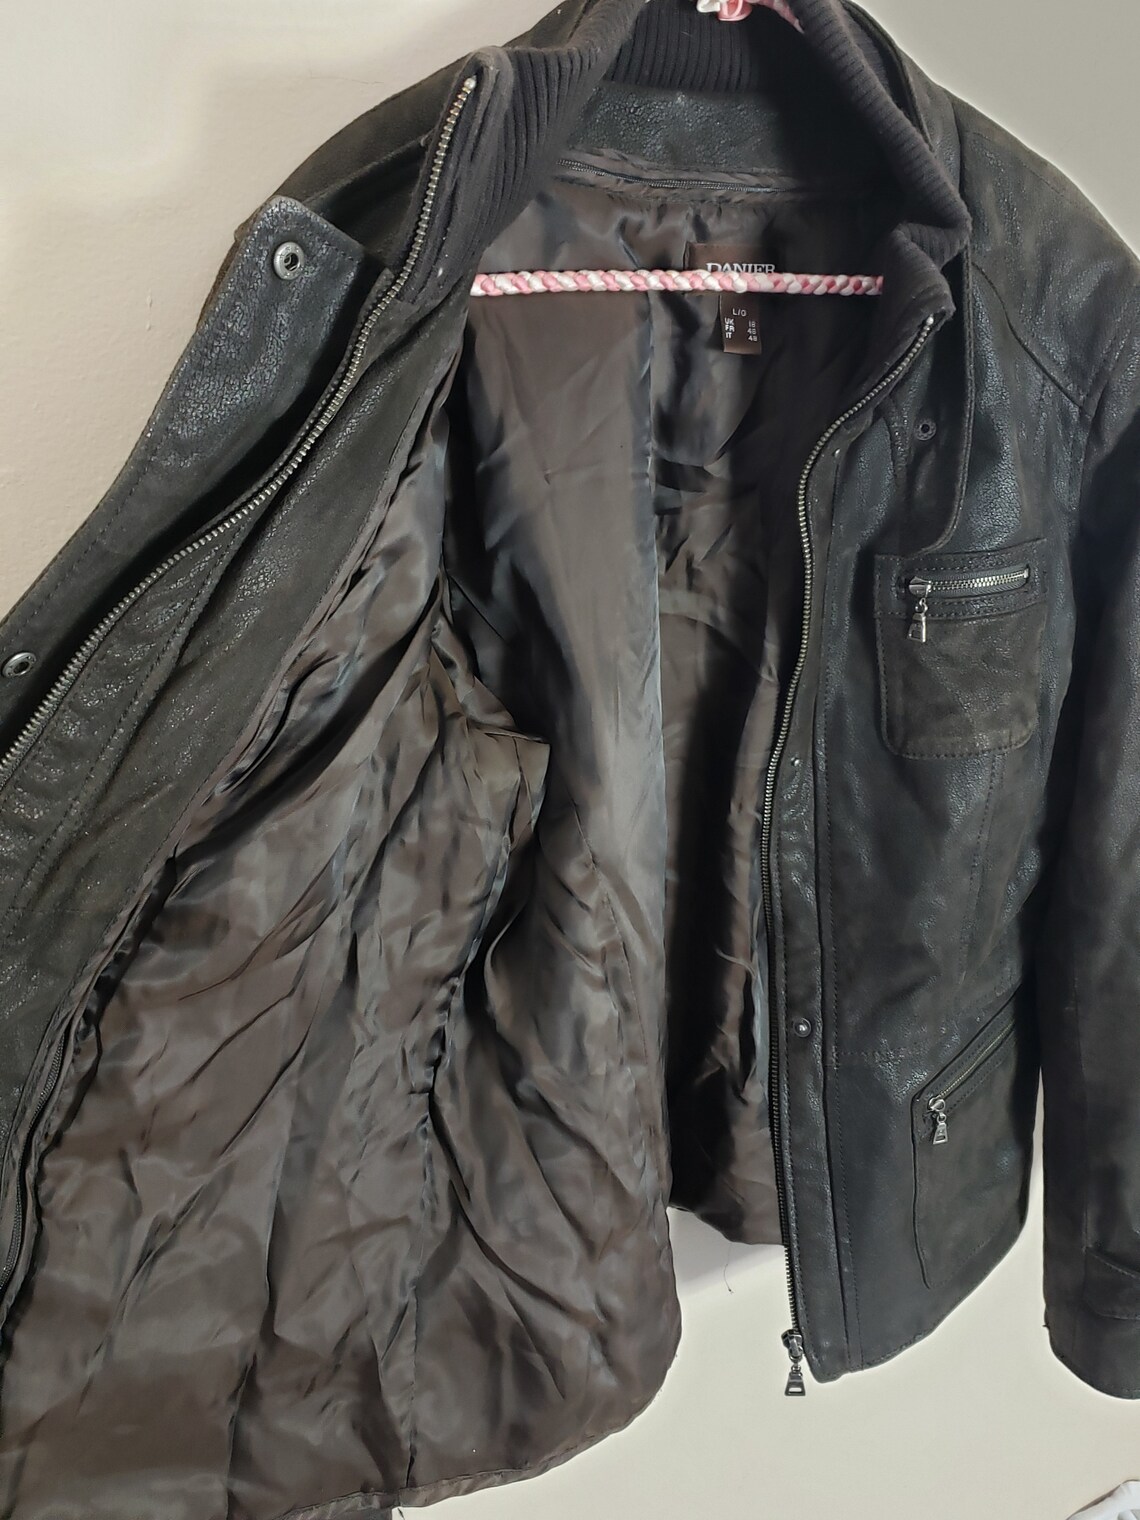 Danier Leather Jacket woman's fashion wear Thinsulate | Etsy